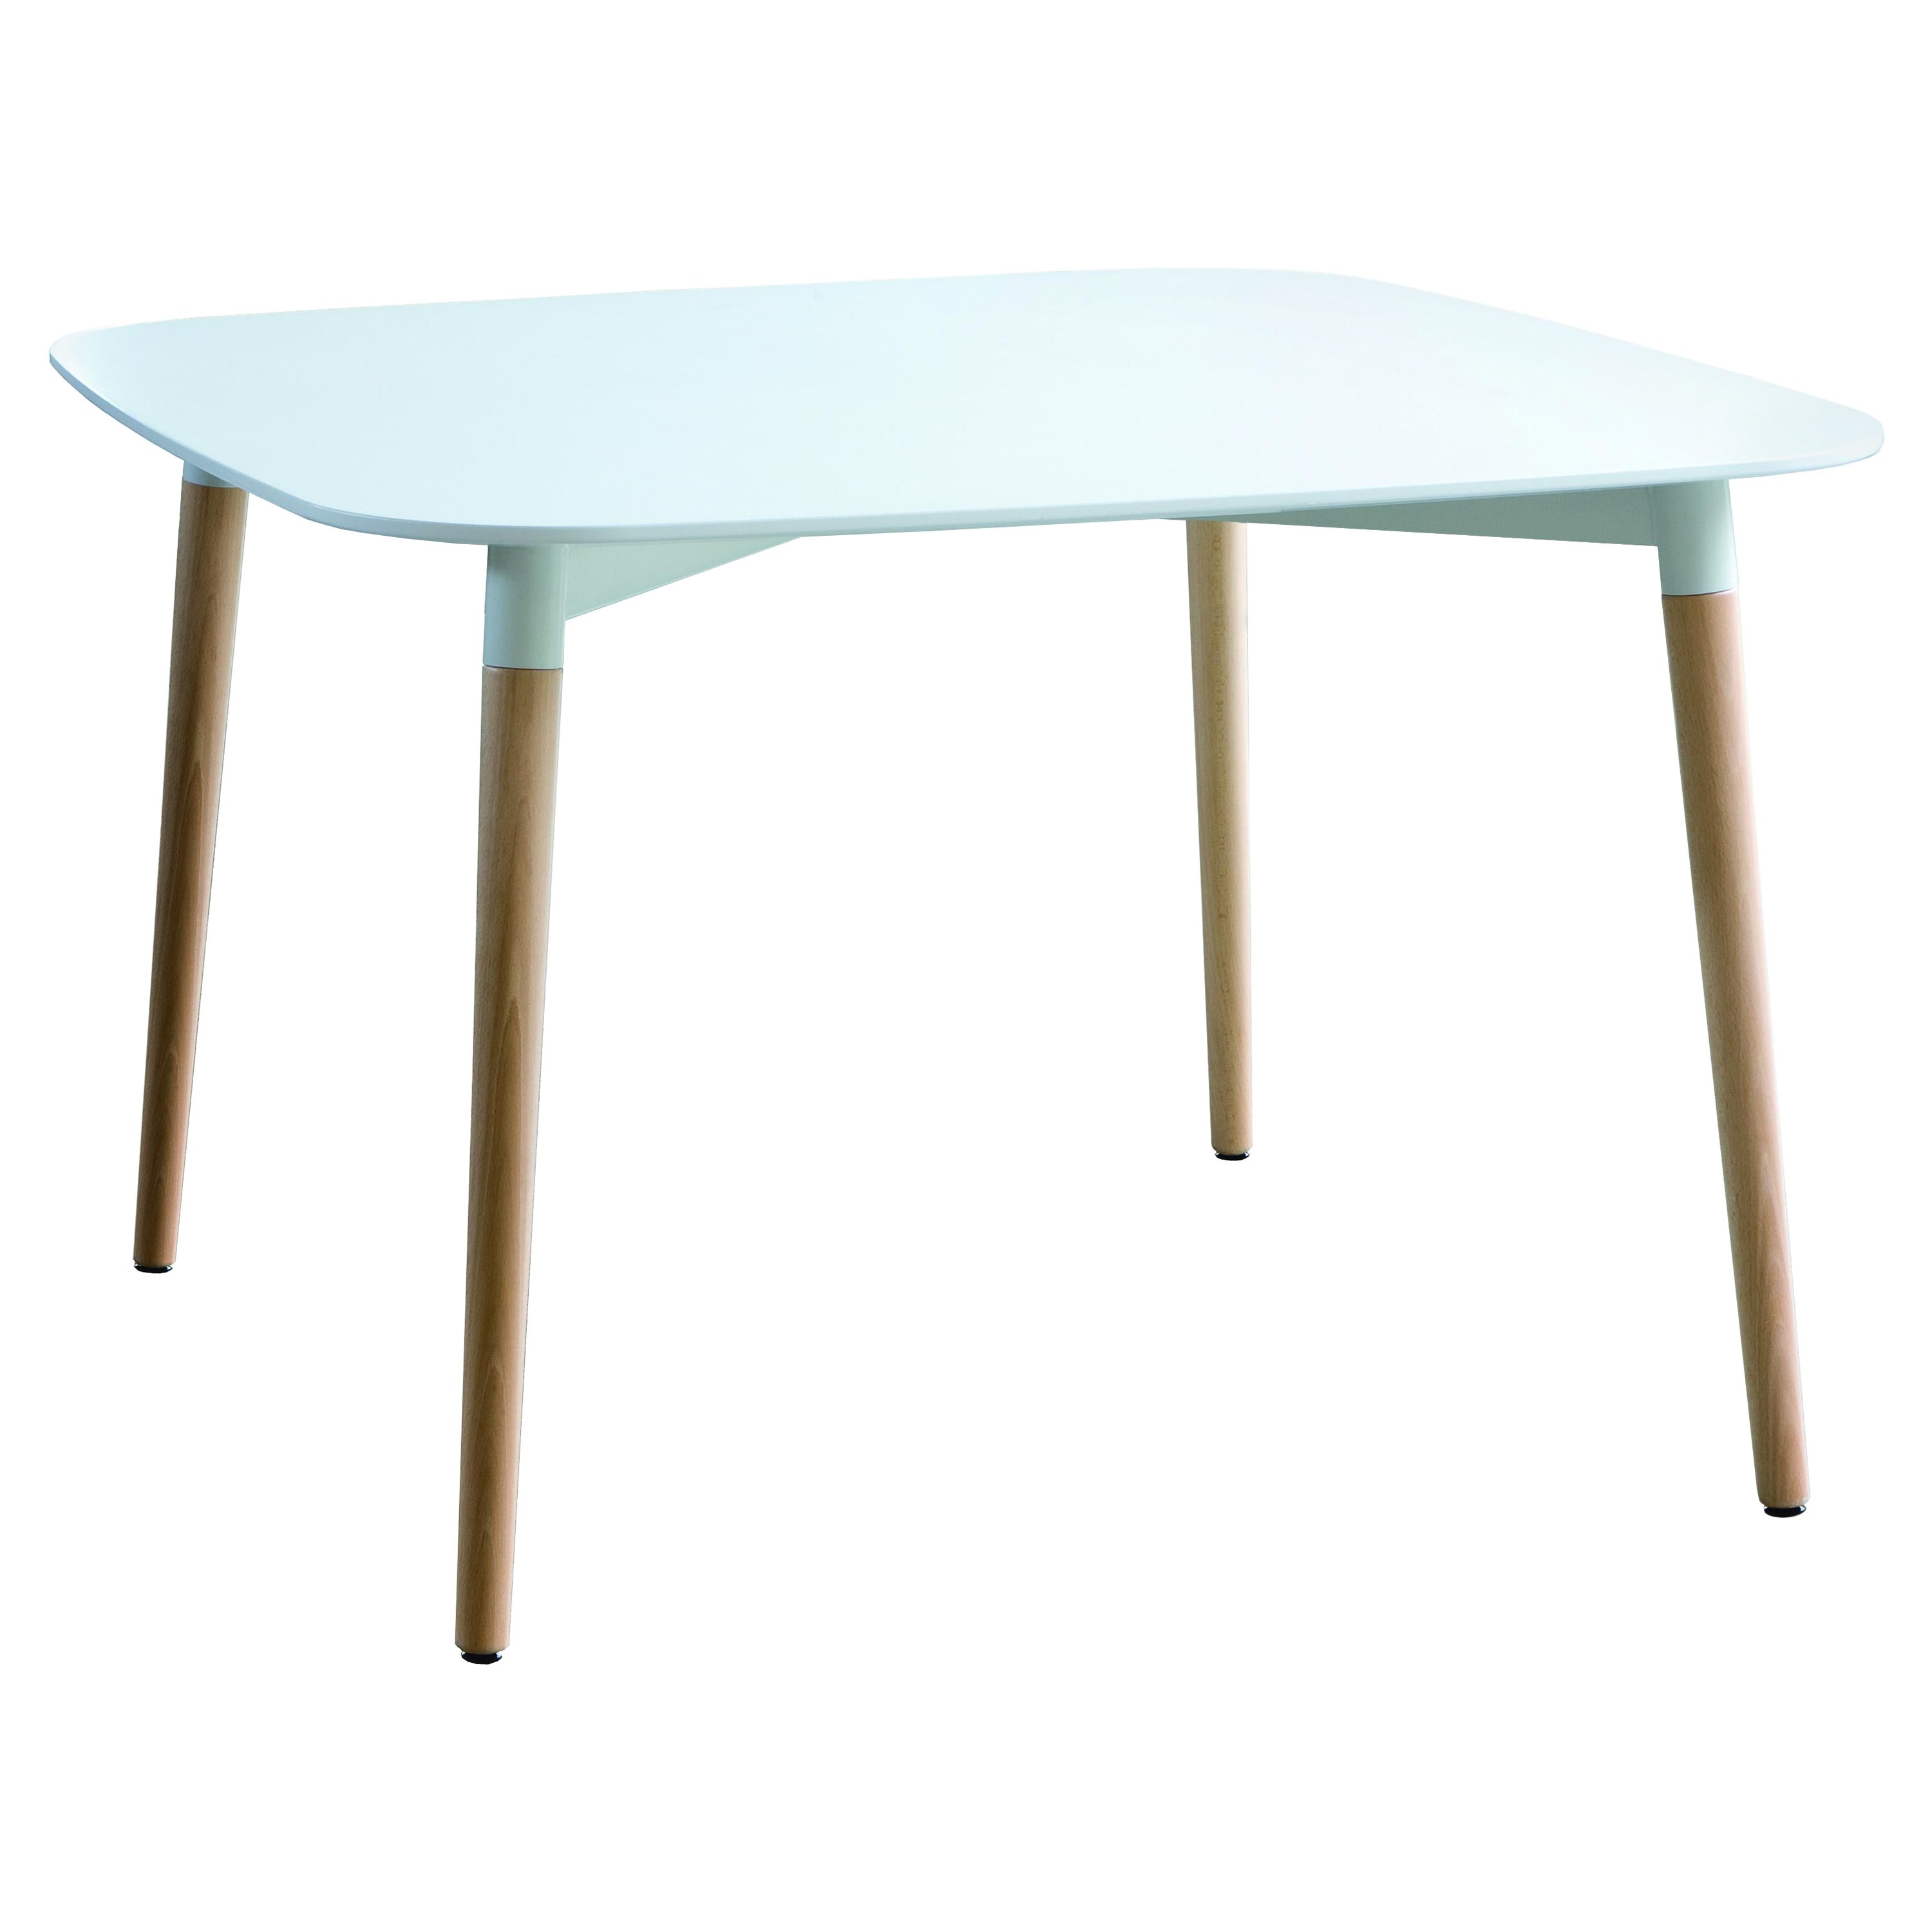 Belloch Cuadrada Table by Lagranja Design